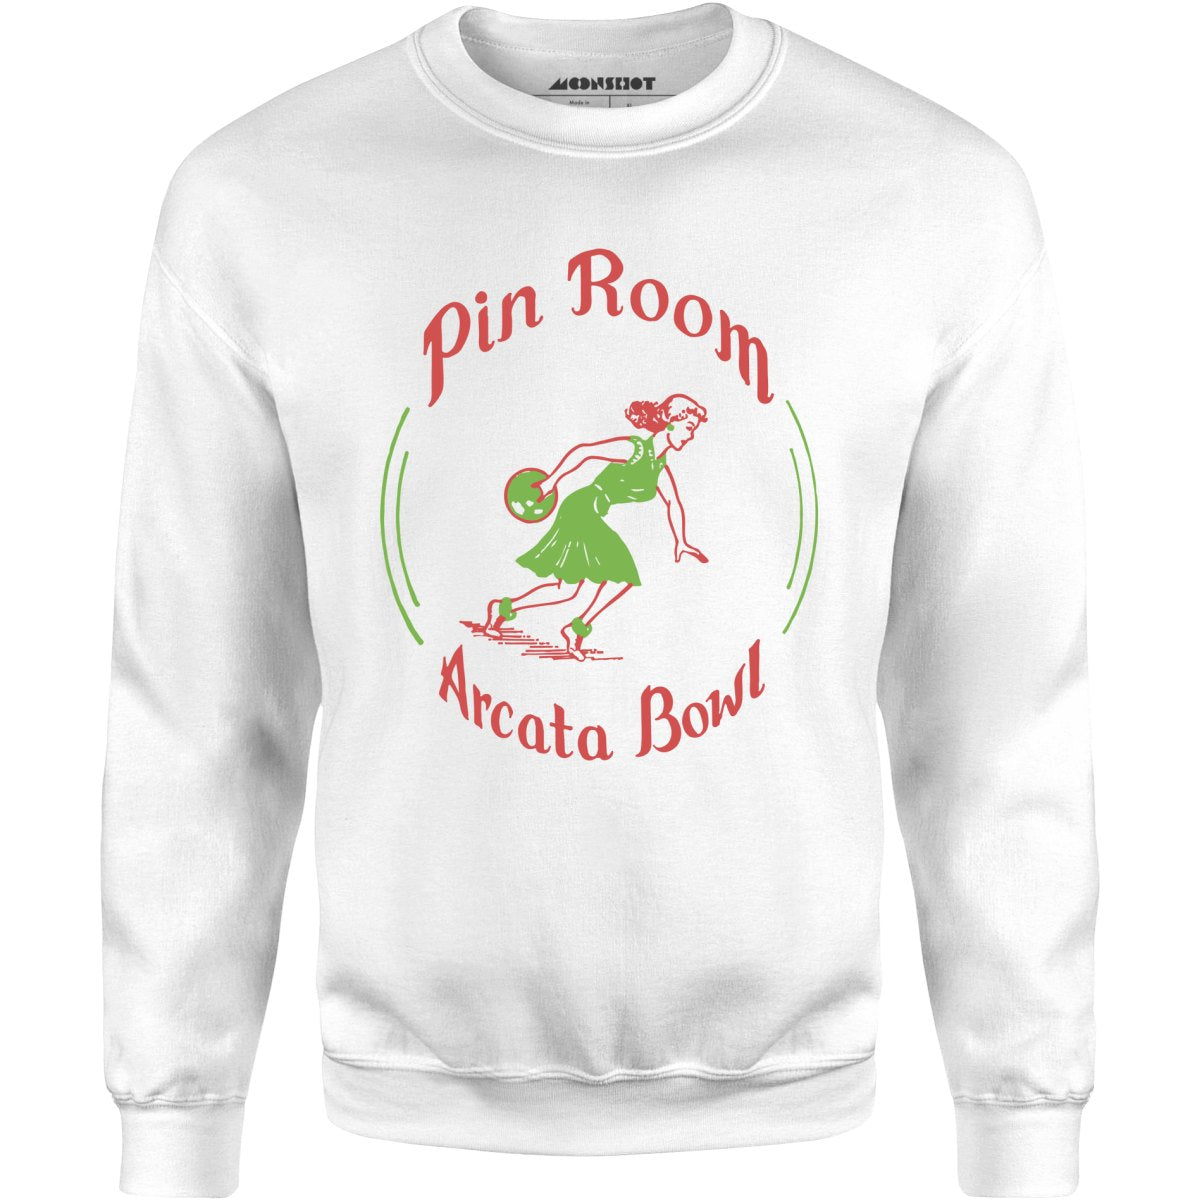 Arcata Bowl Pin Room - Arcata, CA - Vintage Bowling Alley - Unisex Sweatshirt